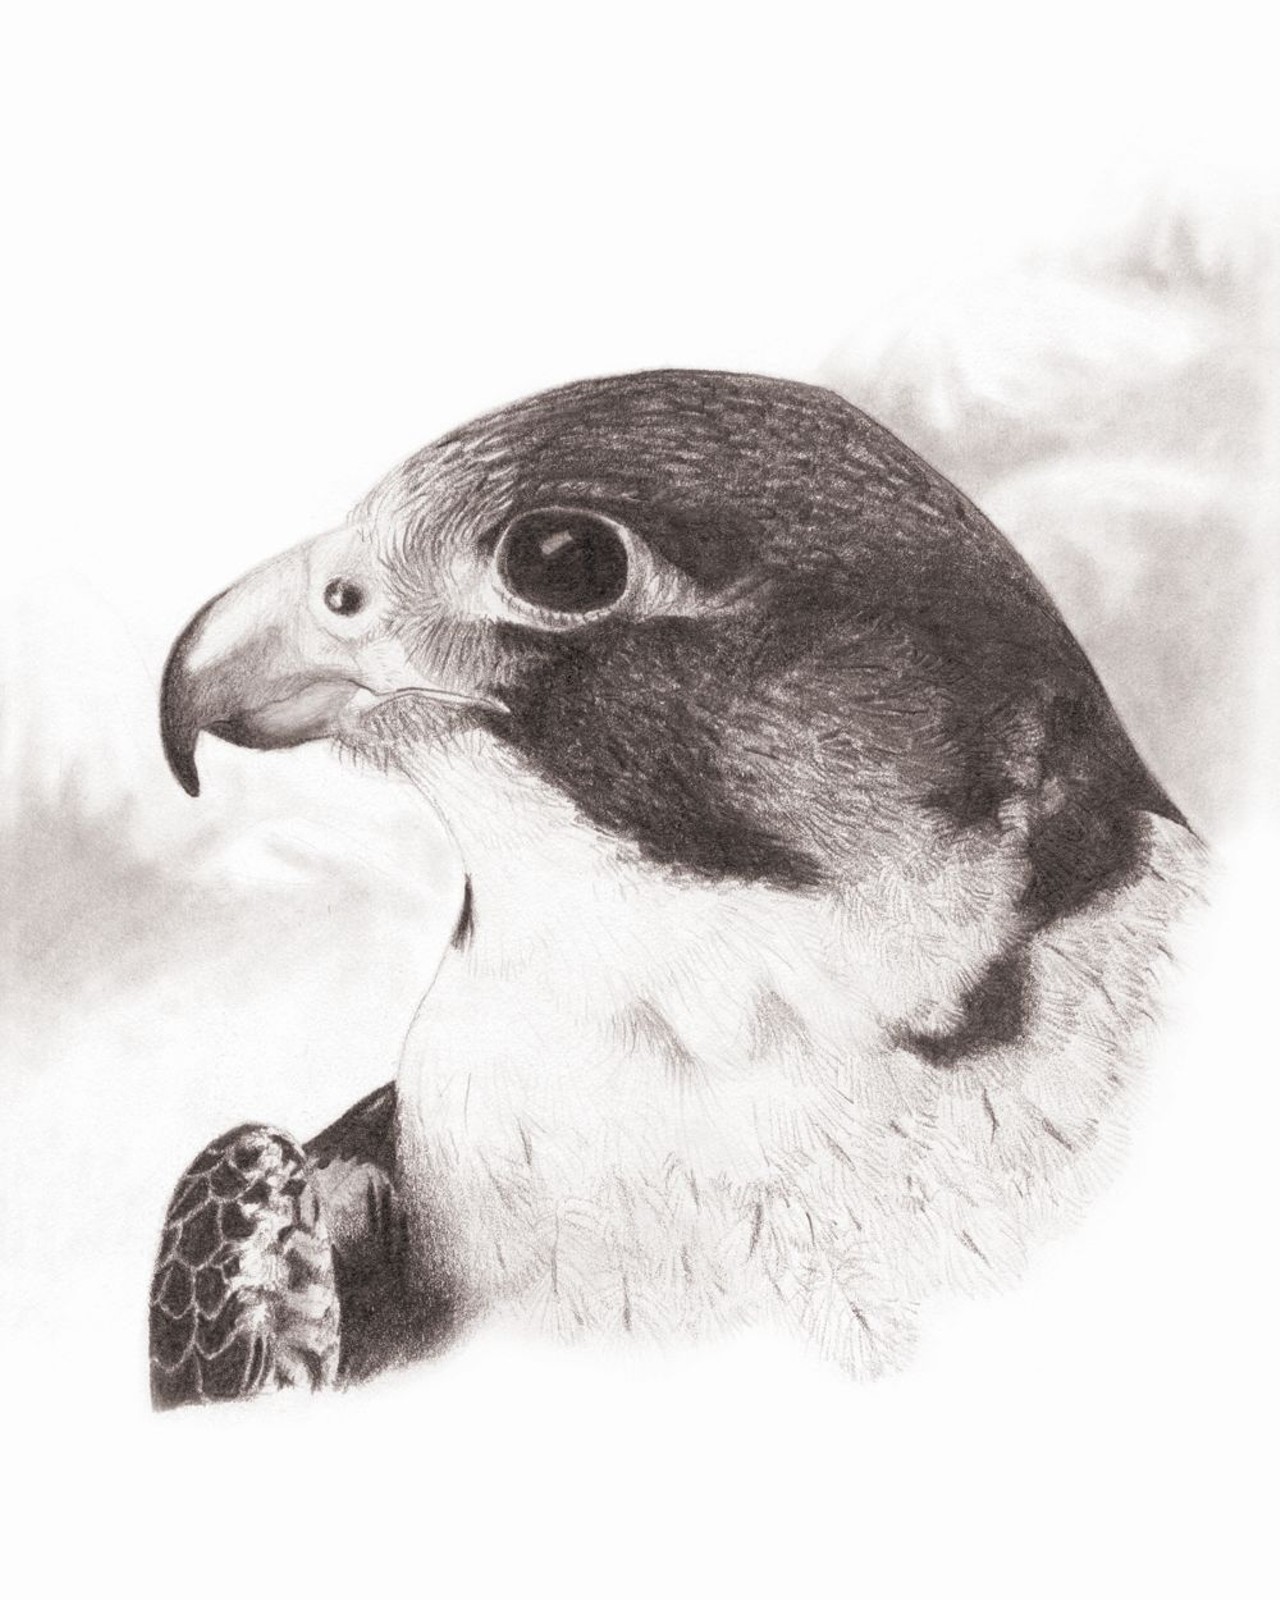 peregrine falcon by Sarah Zagcki  click here to read the studio visit